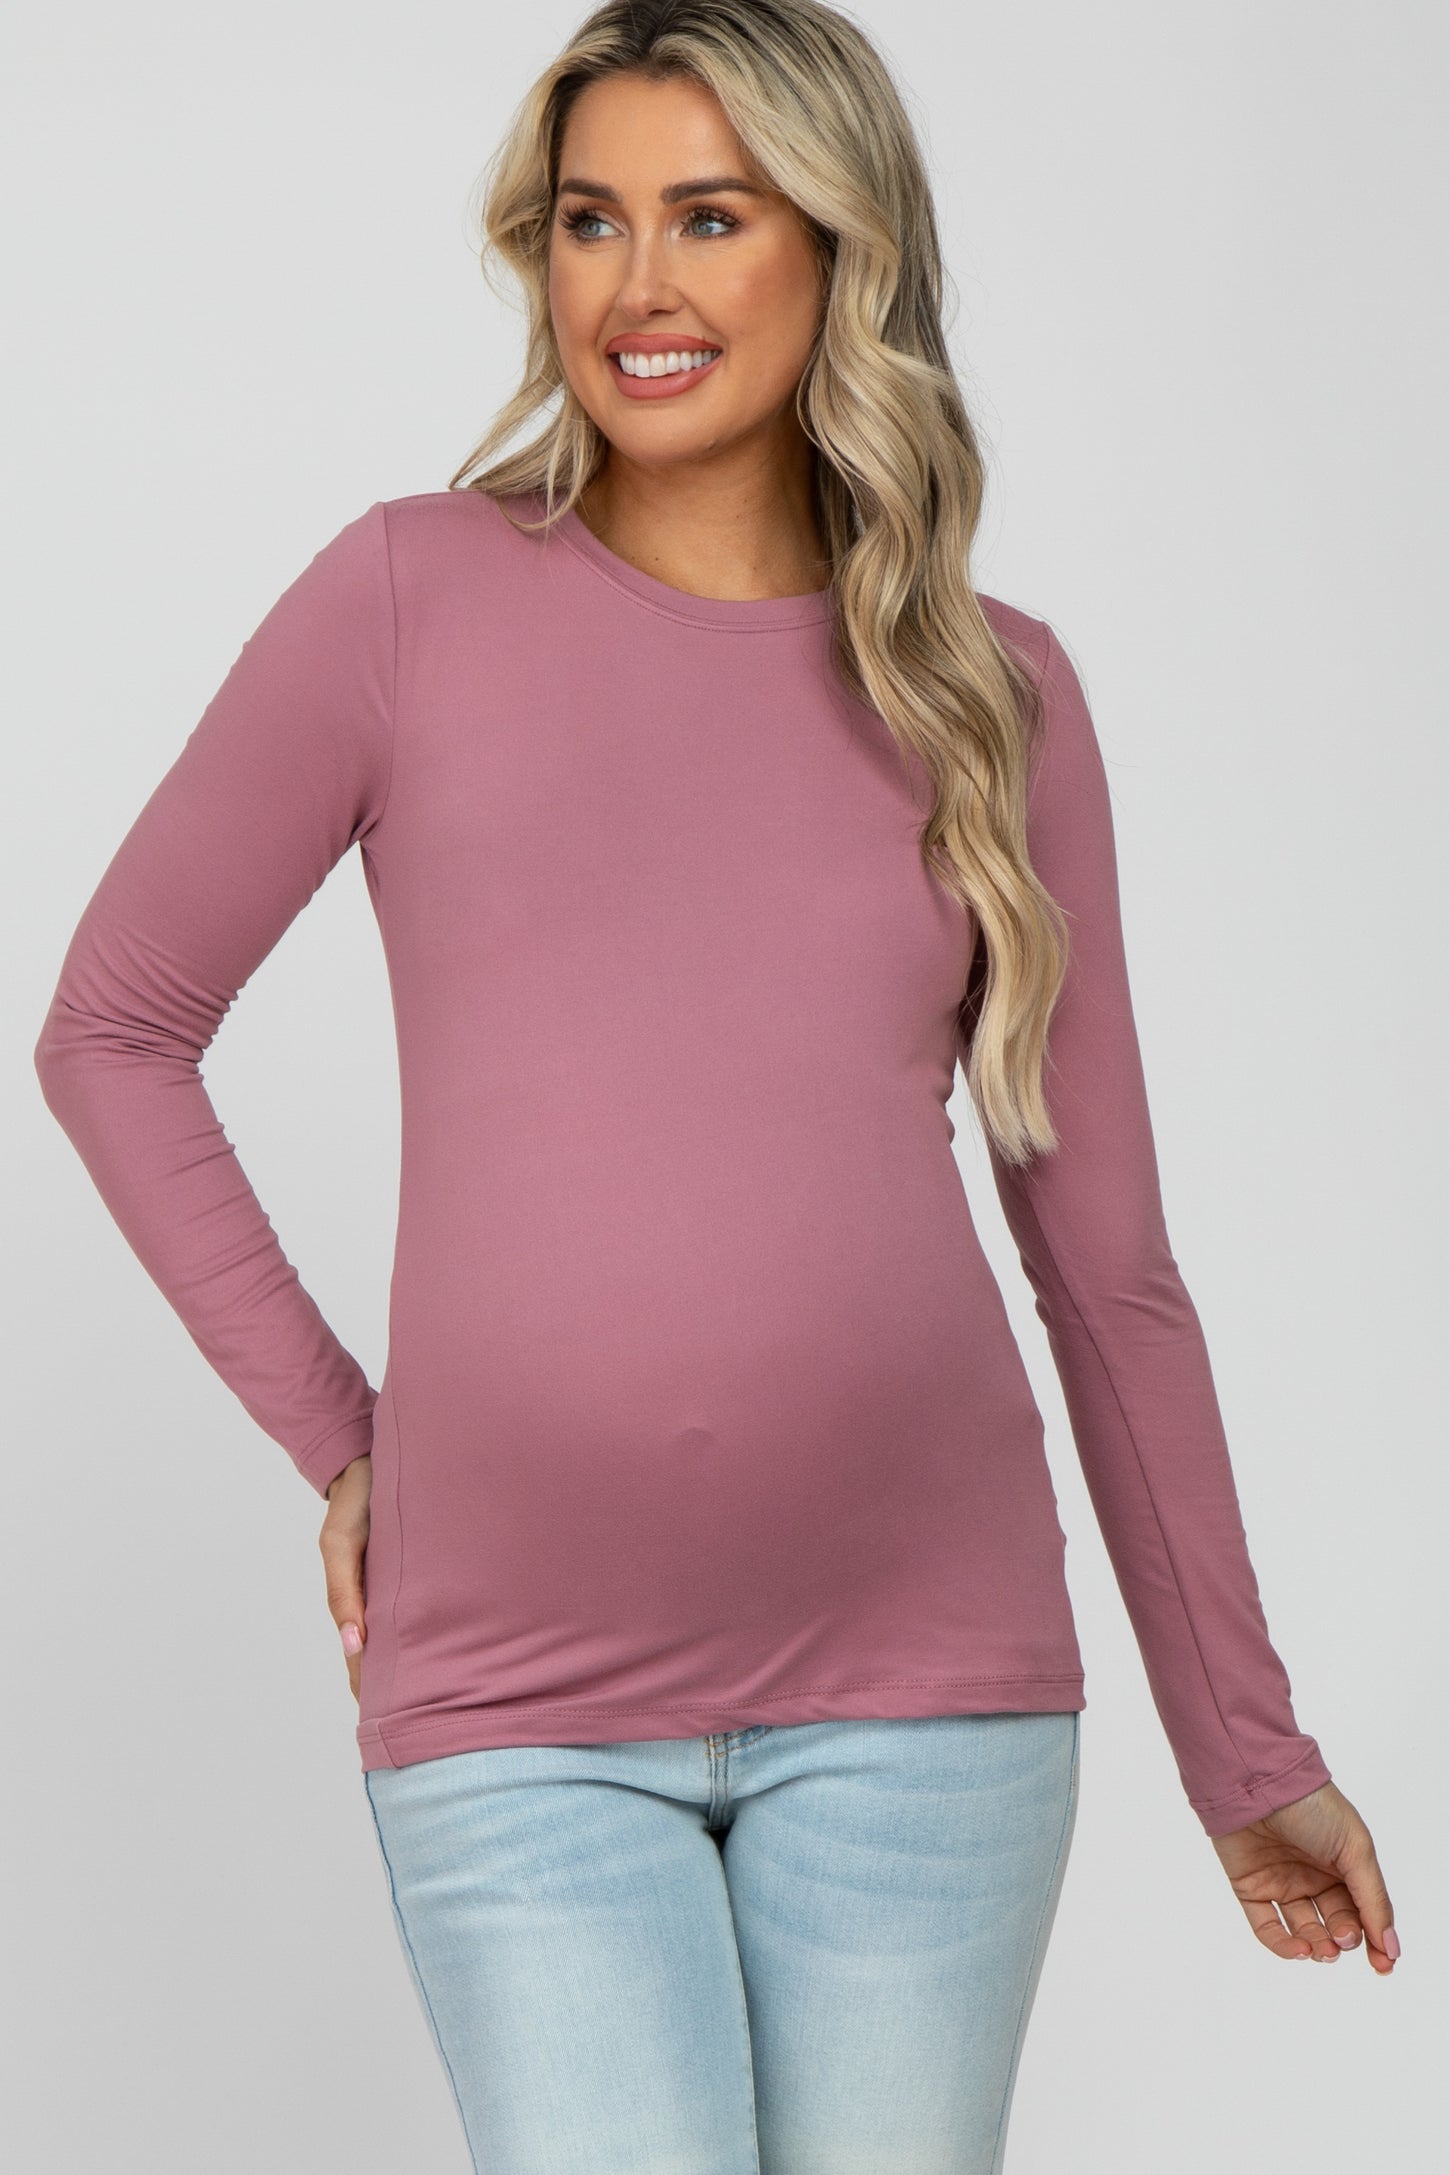 Cute Ribbon Maternity Shirt for Baby Shower - Pregnant T-Shirt / Baby Bump  shirt